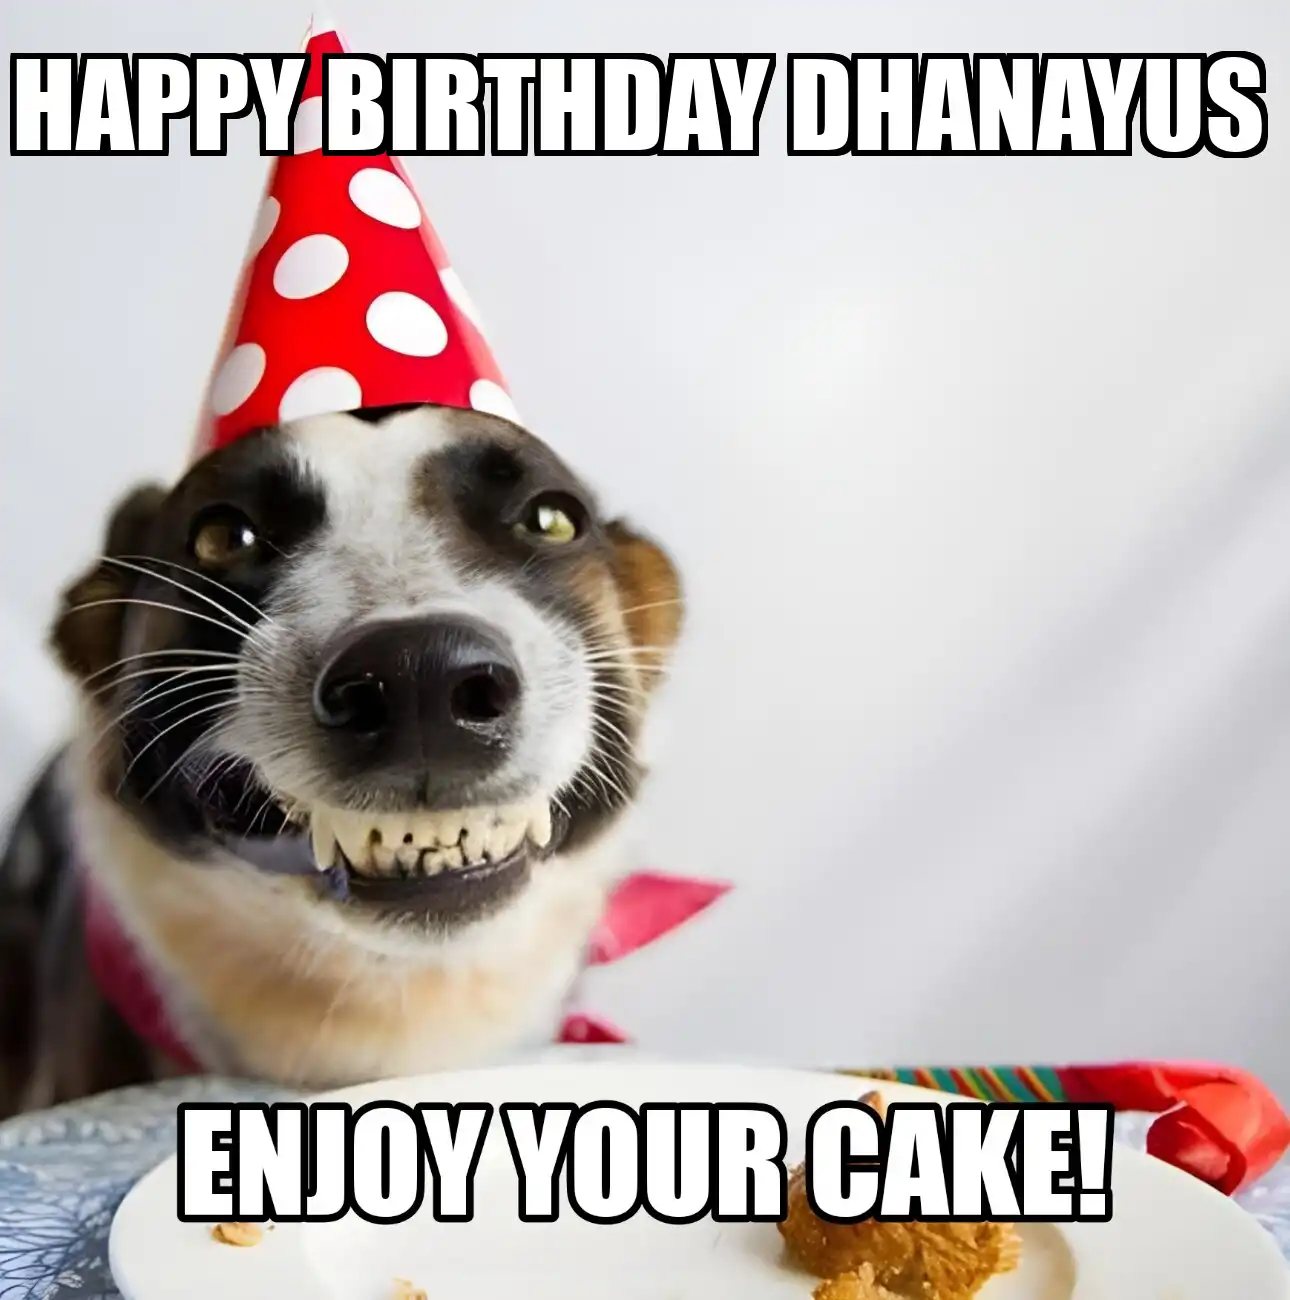 Happy Birthday Dhanayus Enjoy Your Cake Dog Meme